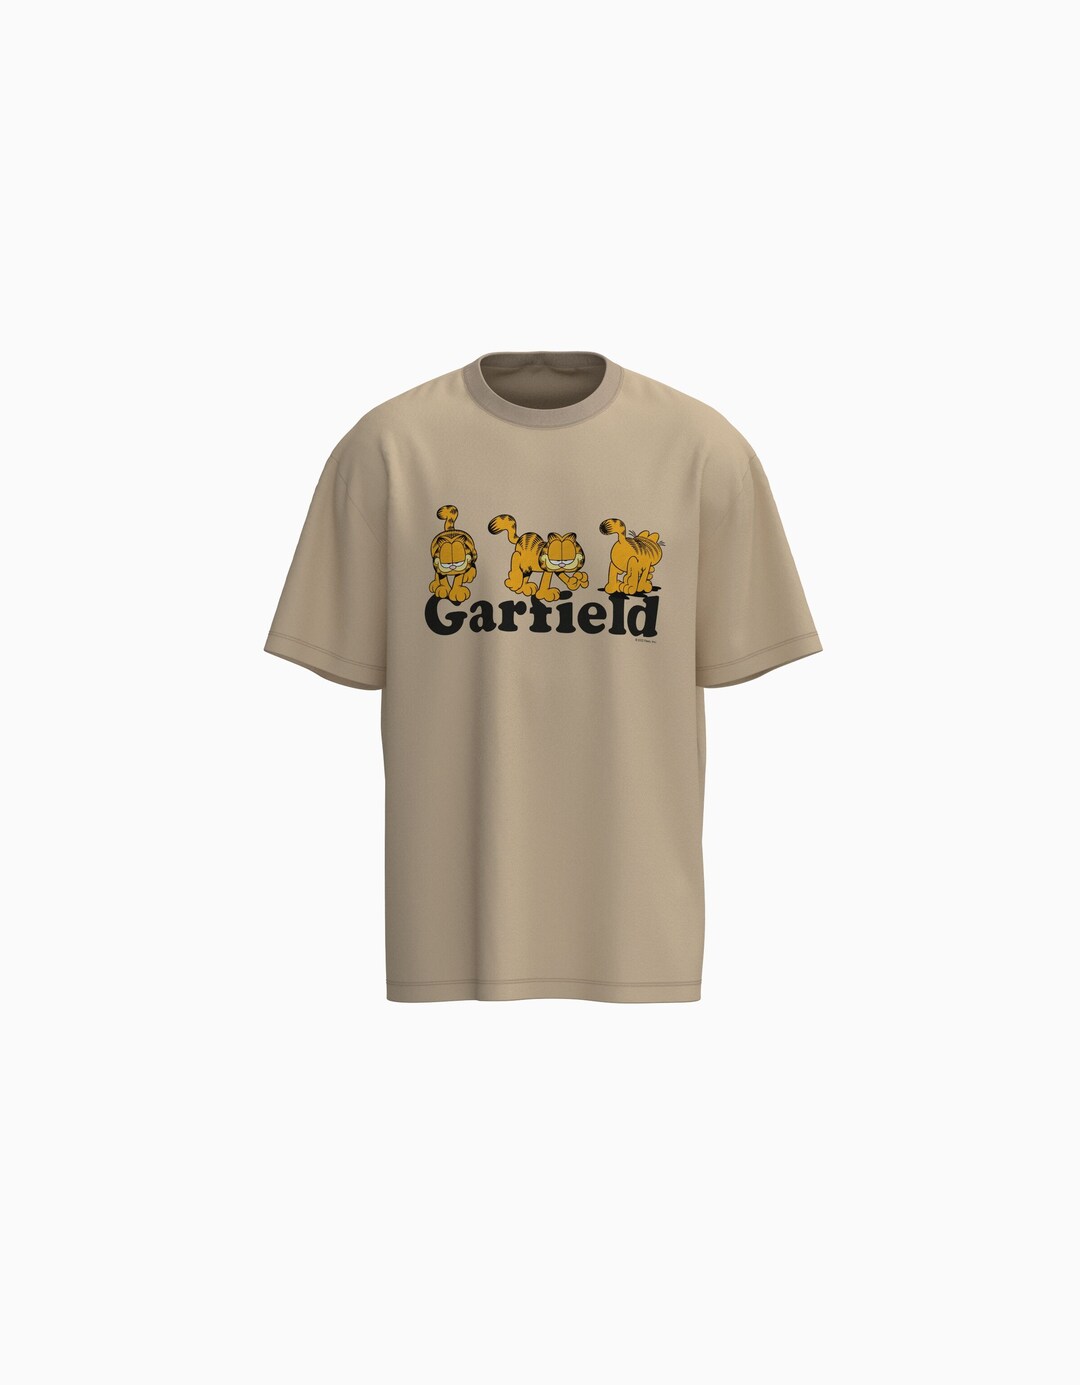 Garfield print estanpatudun kamiseta mahuka-motza, boxy fit